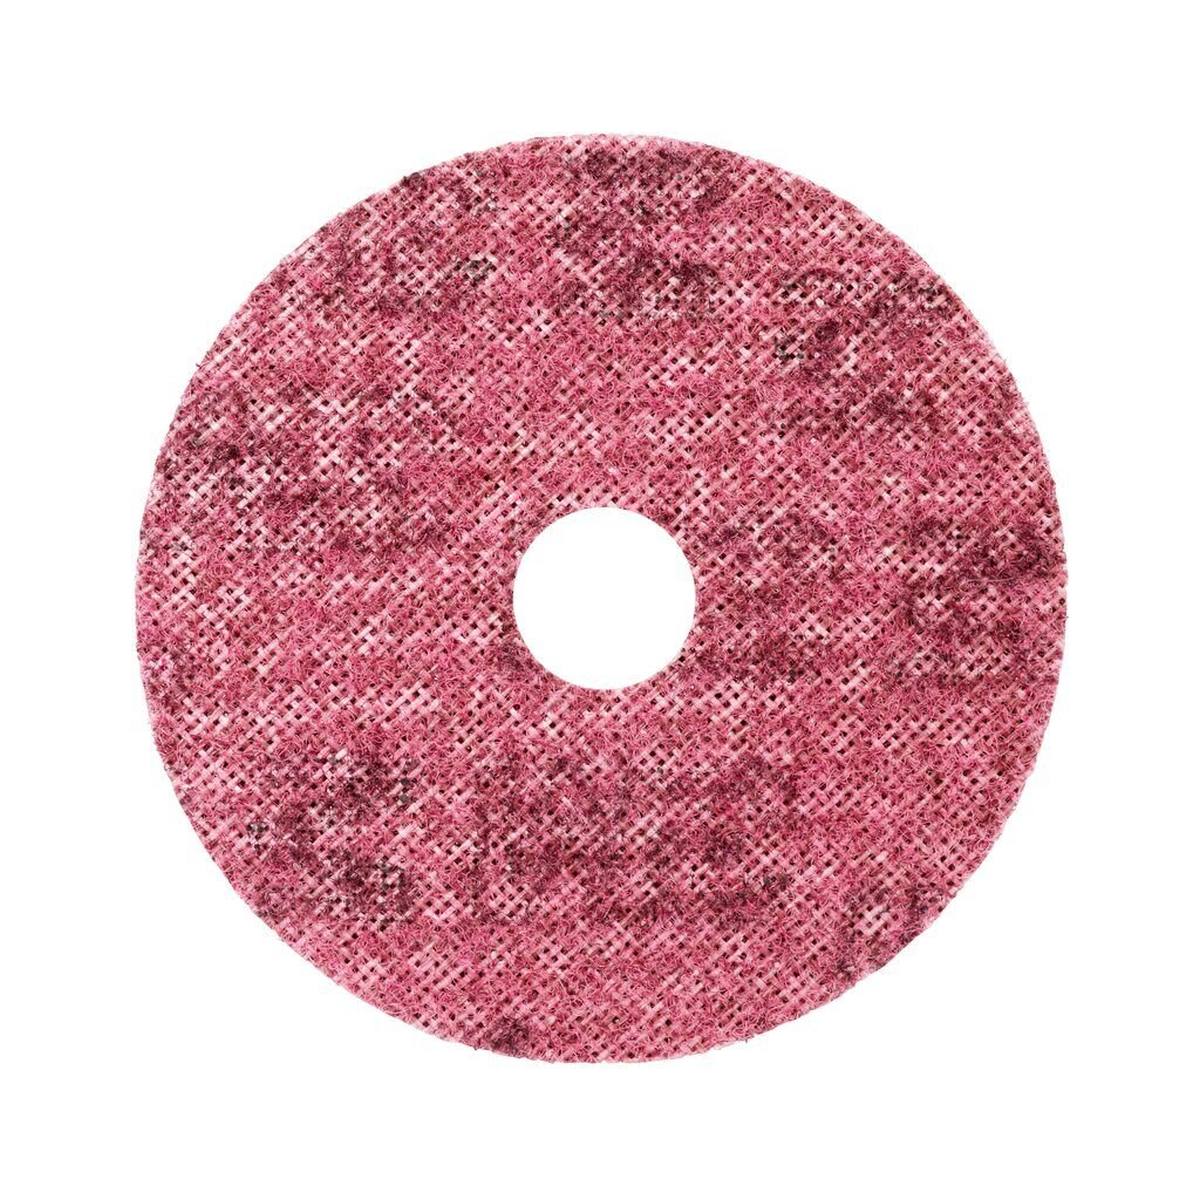 3M Scotch-Brite disco no tejido SC-DH con centrado, rojo, 125 mm, 22 mm, A, medio #246606